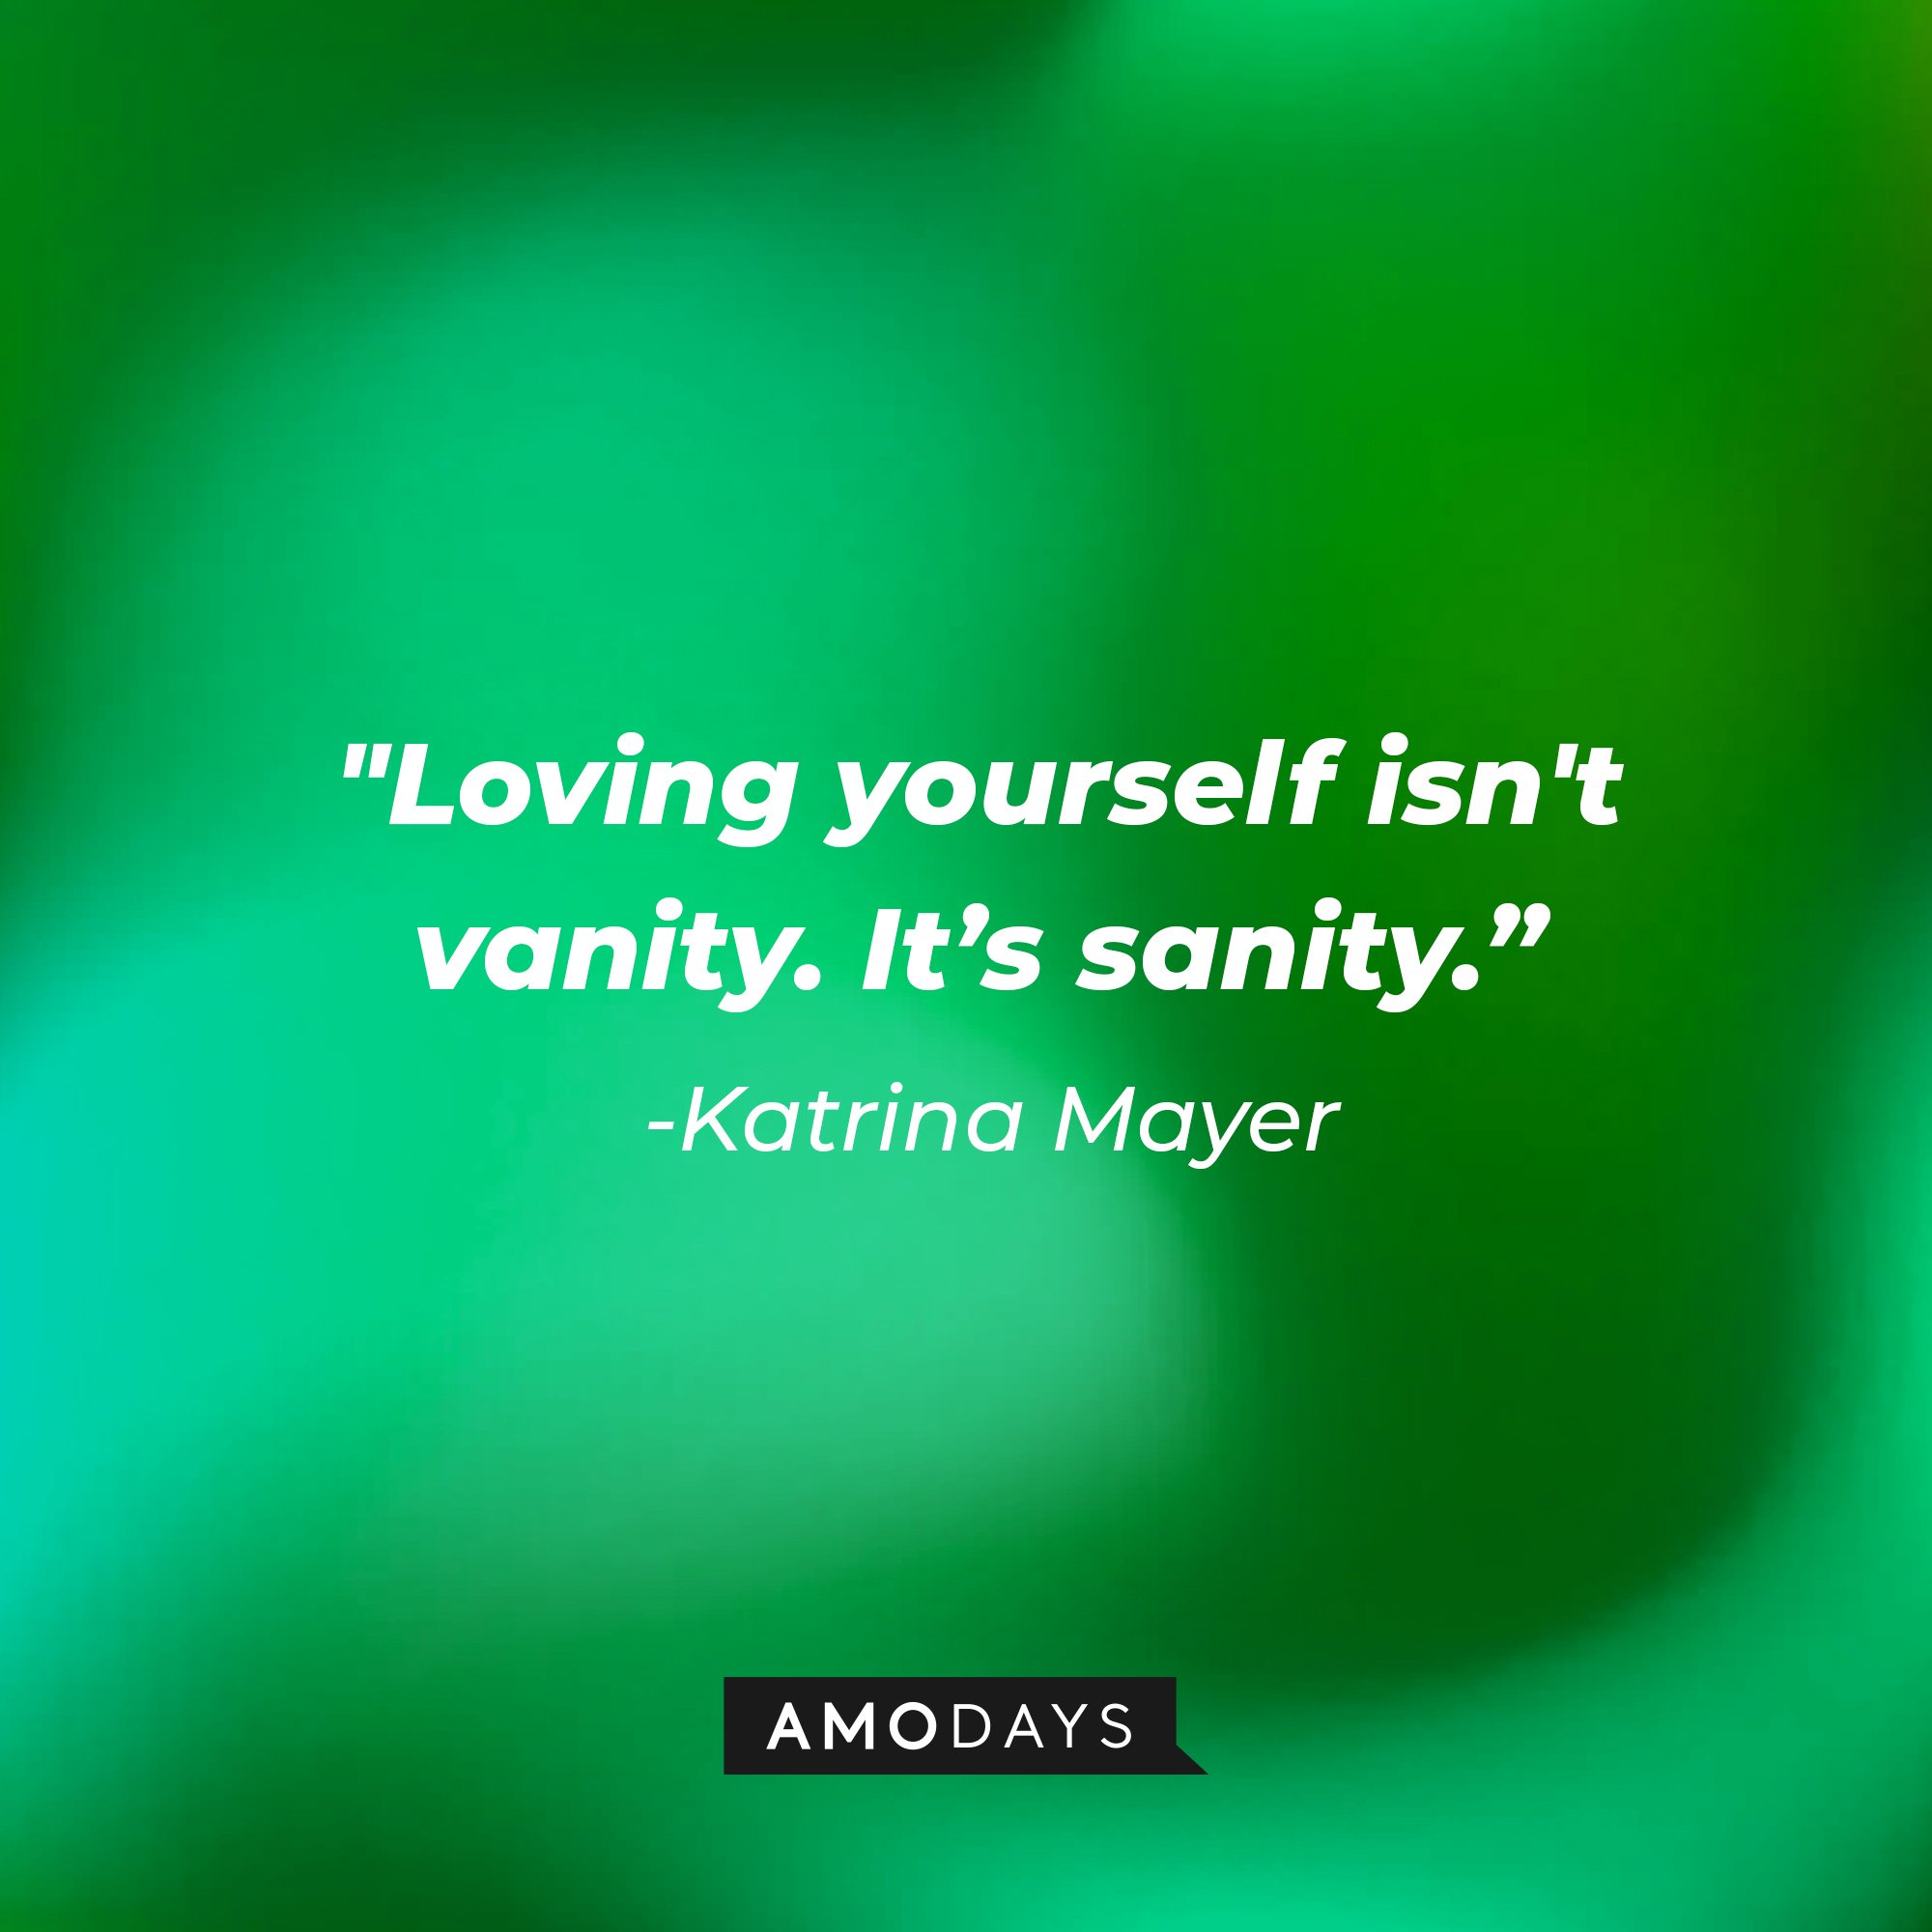 Katrina Mayer's quote: "Loving yourself isn't vanity. It's sanity." | Image: AmoDays